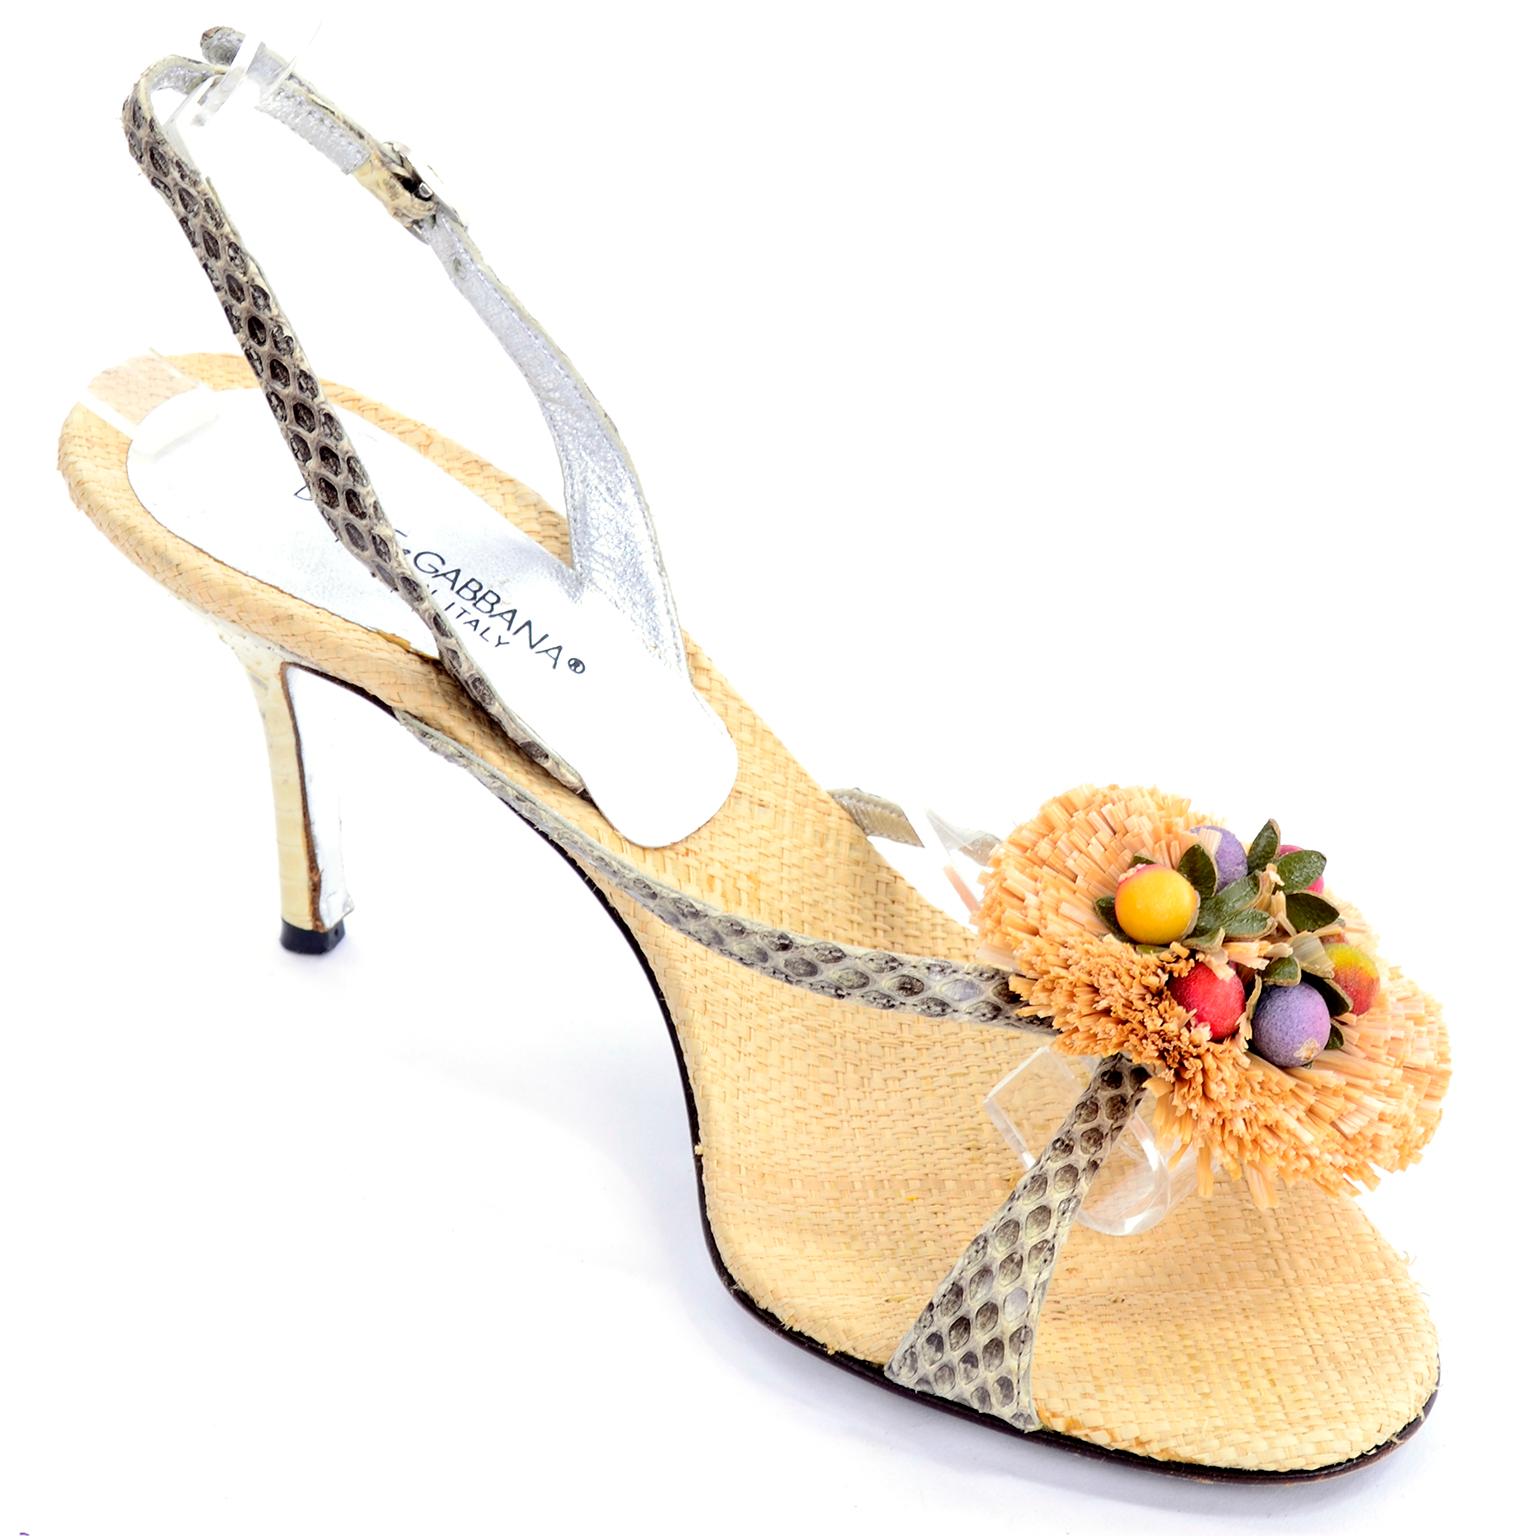 dolce and gabbana heels